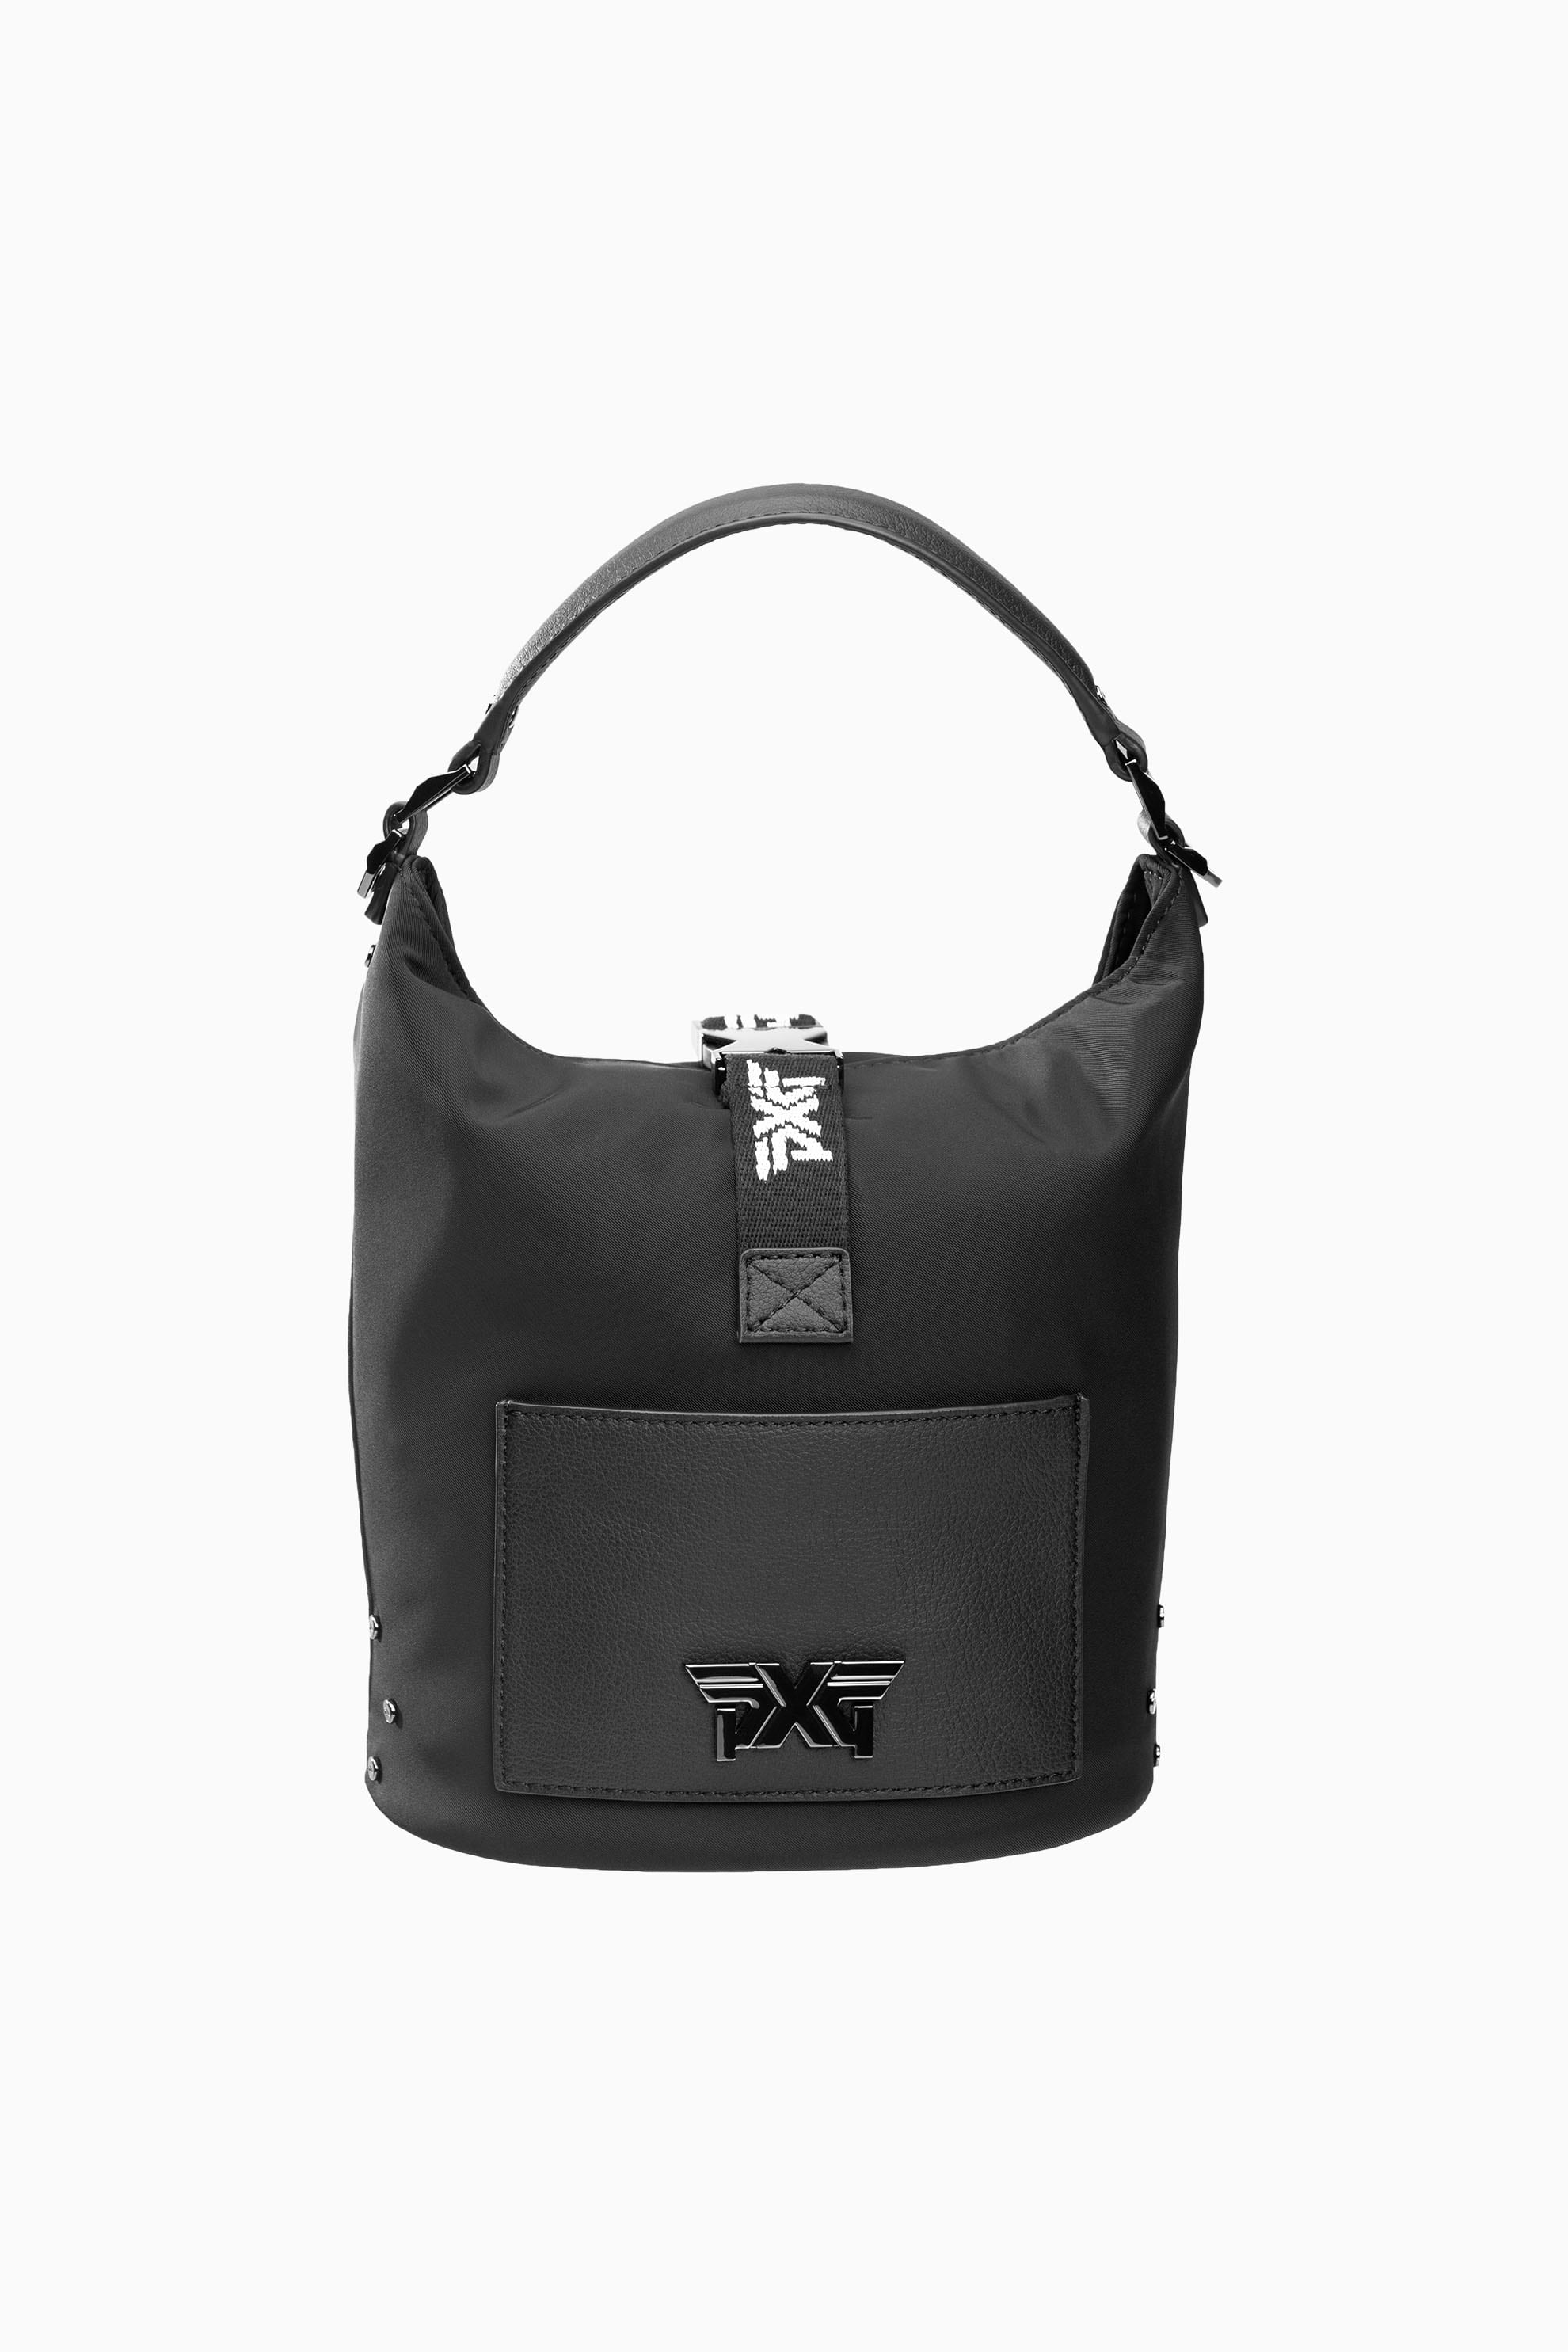 PXG Lightweight Crossbody Bag | PXG Bags and Totes: Premium Design 